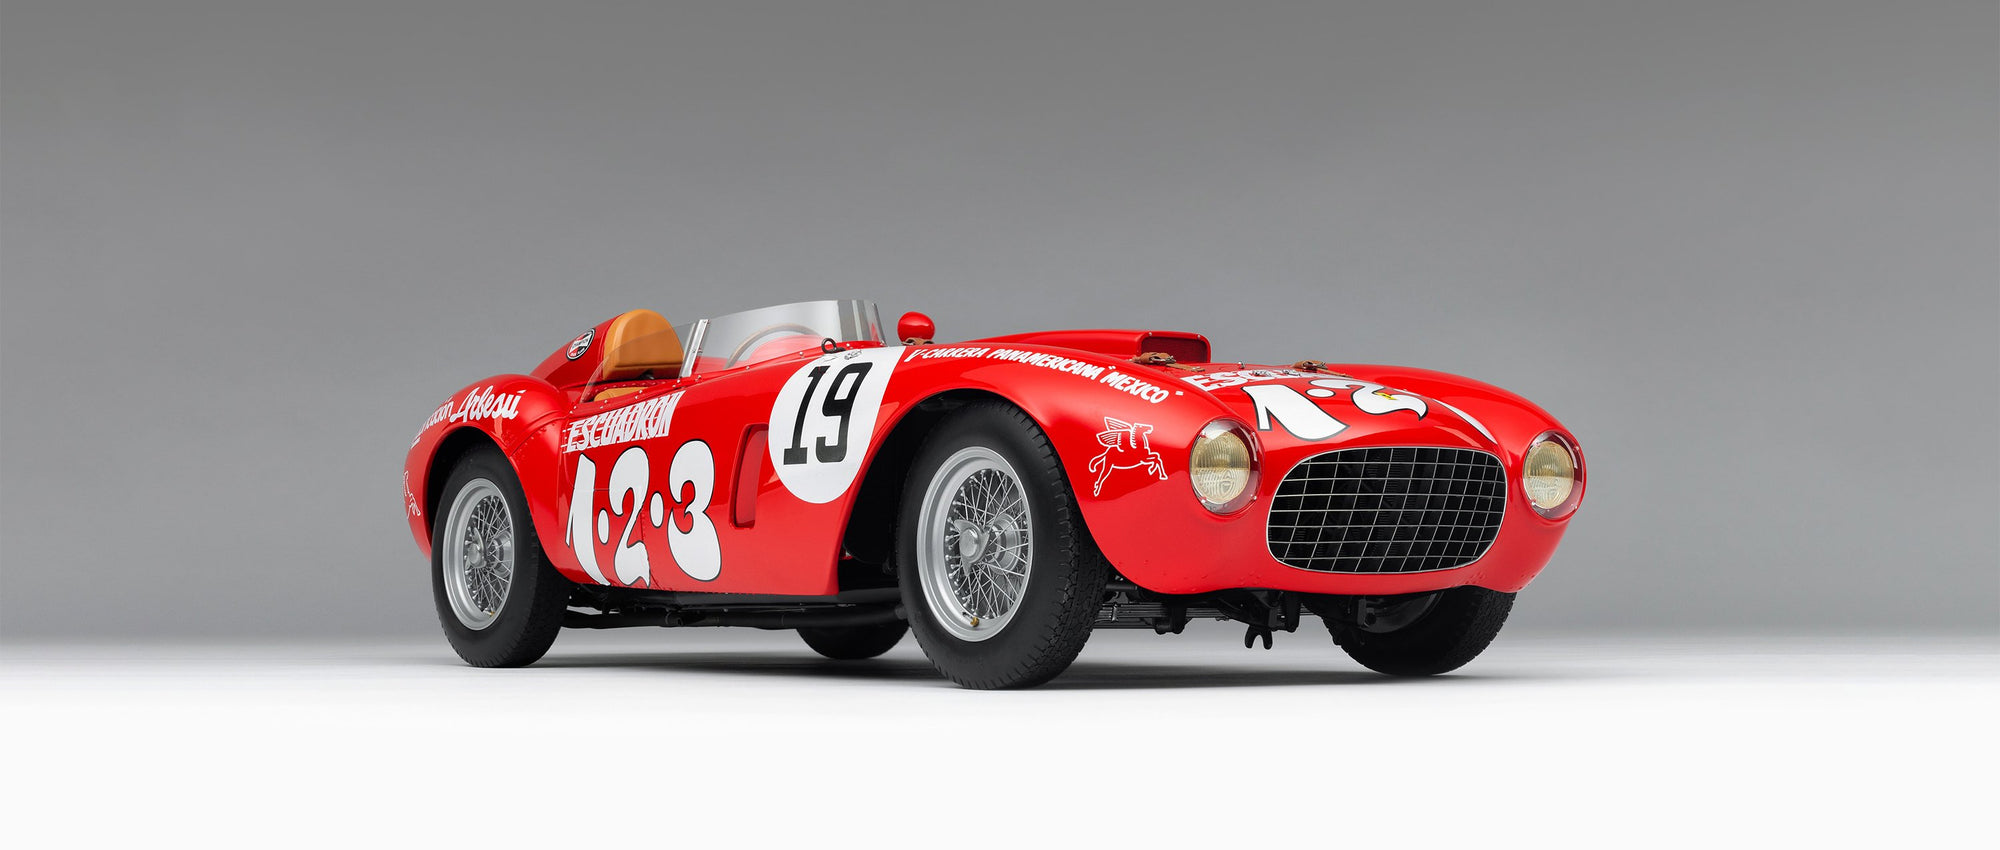 Ferrari 375 Plus - 1954 Carrera Panamericana Winner - Maglioni